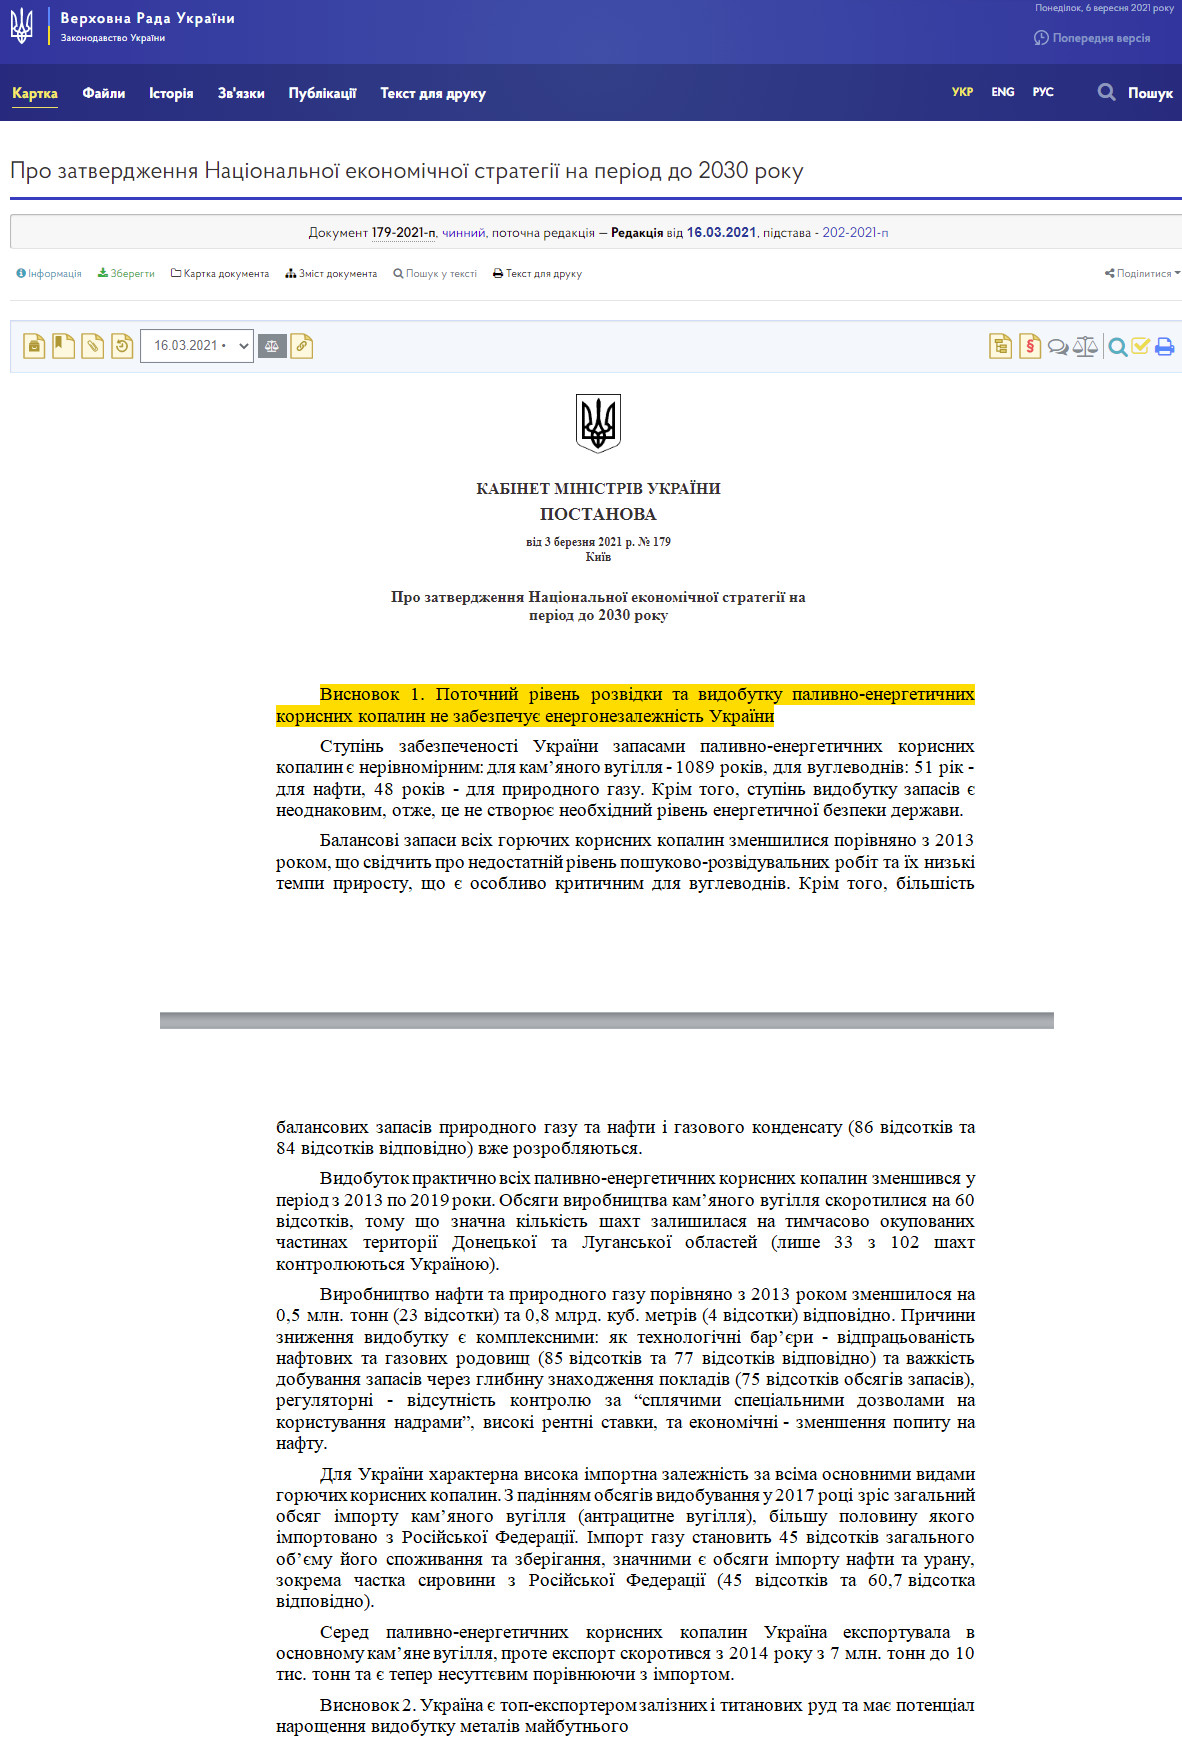 https://zakon.rada.gov.ua/laws/show/202-2021-%D0%BF#n8